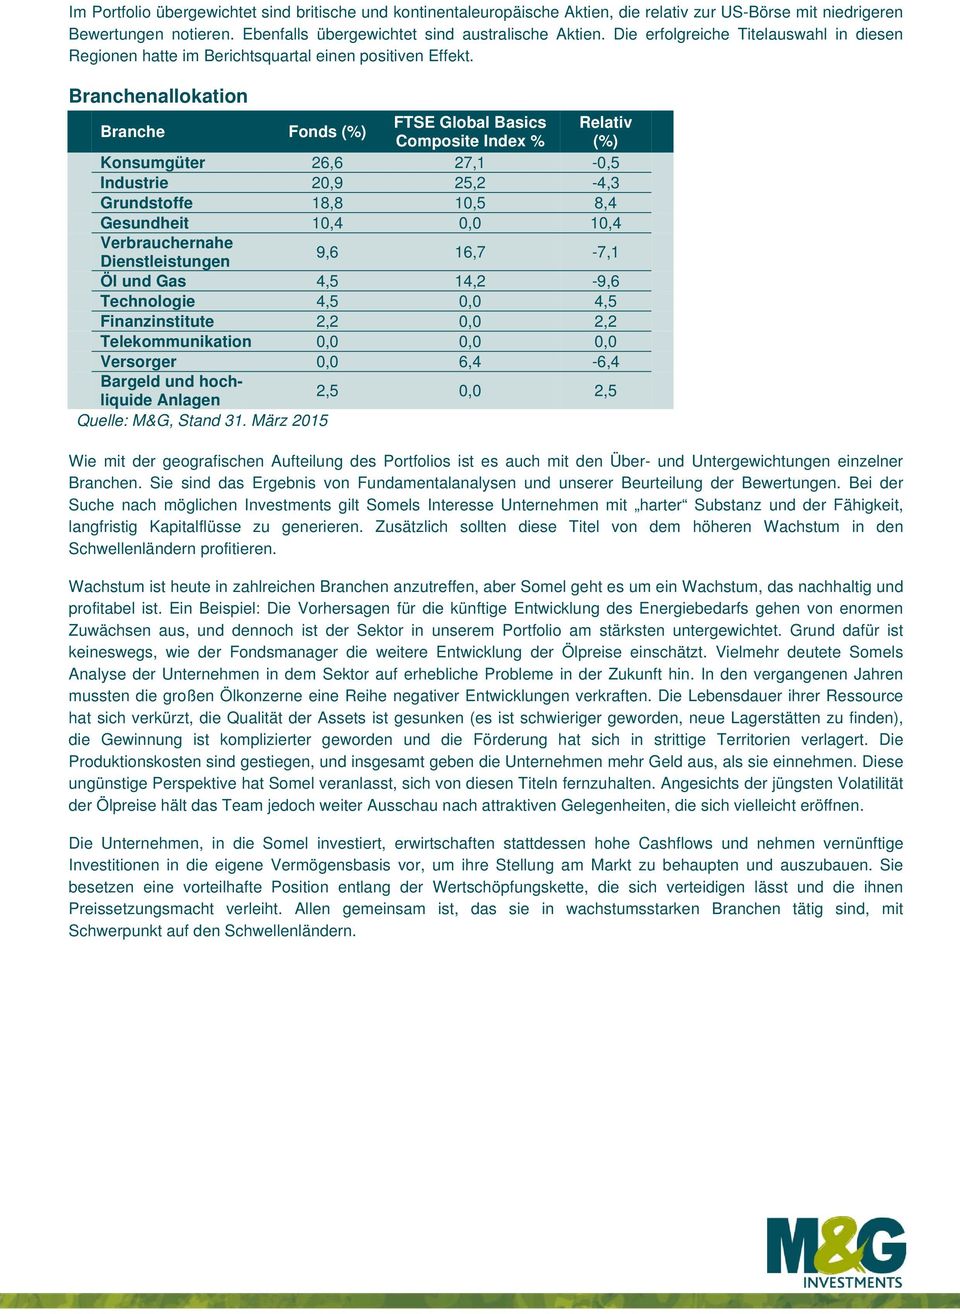 Branchenallokation Branche Fonds (%) FTSE Global Basics Relativ Composite Index % (%) Konsumgüter 26,6 27,1-0,5 Industrie 20,9 25,2-4,3 Grundstoffe 18,8 10,5 8,4 Gesundheit 10,4 0,0 10,4